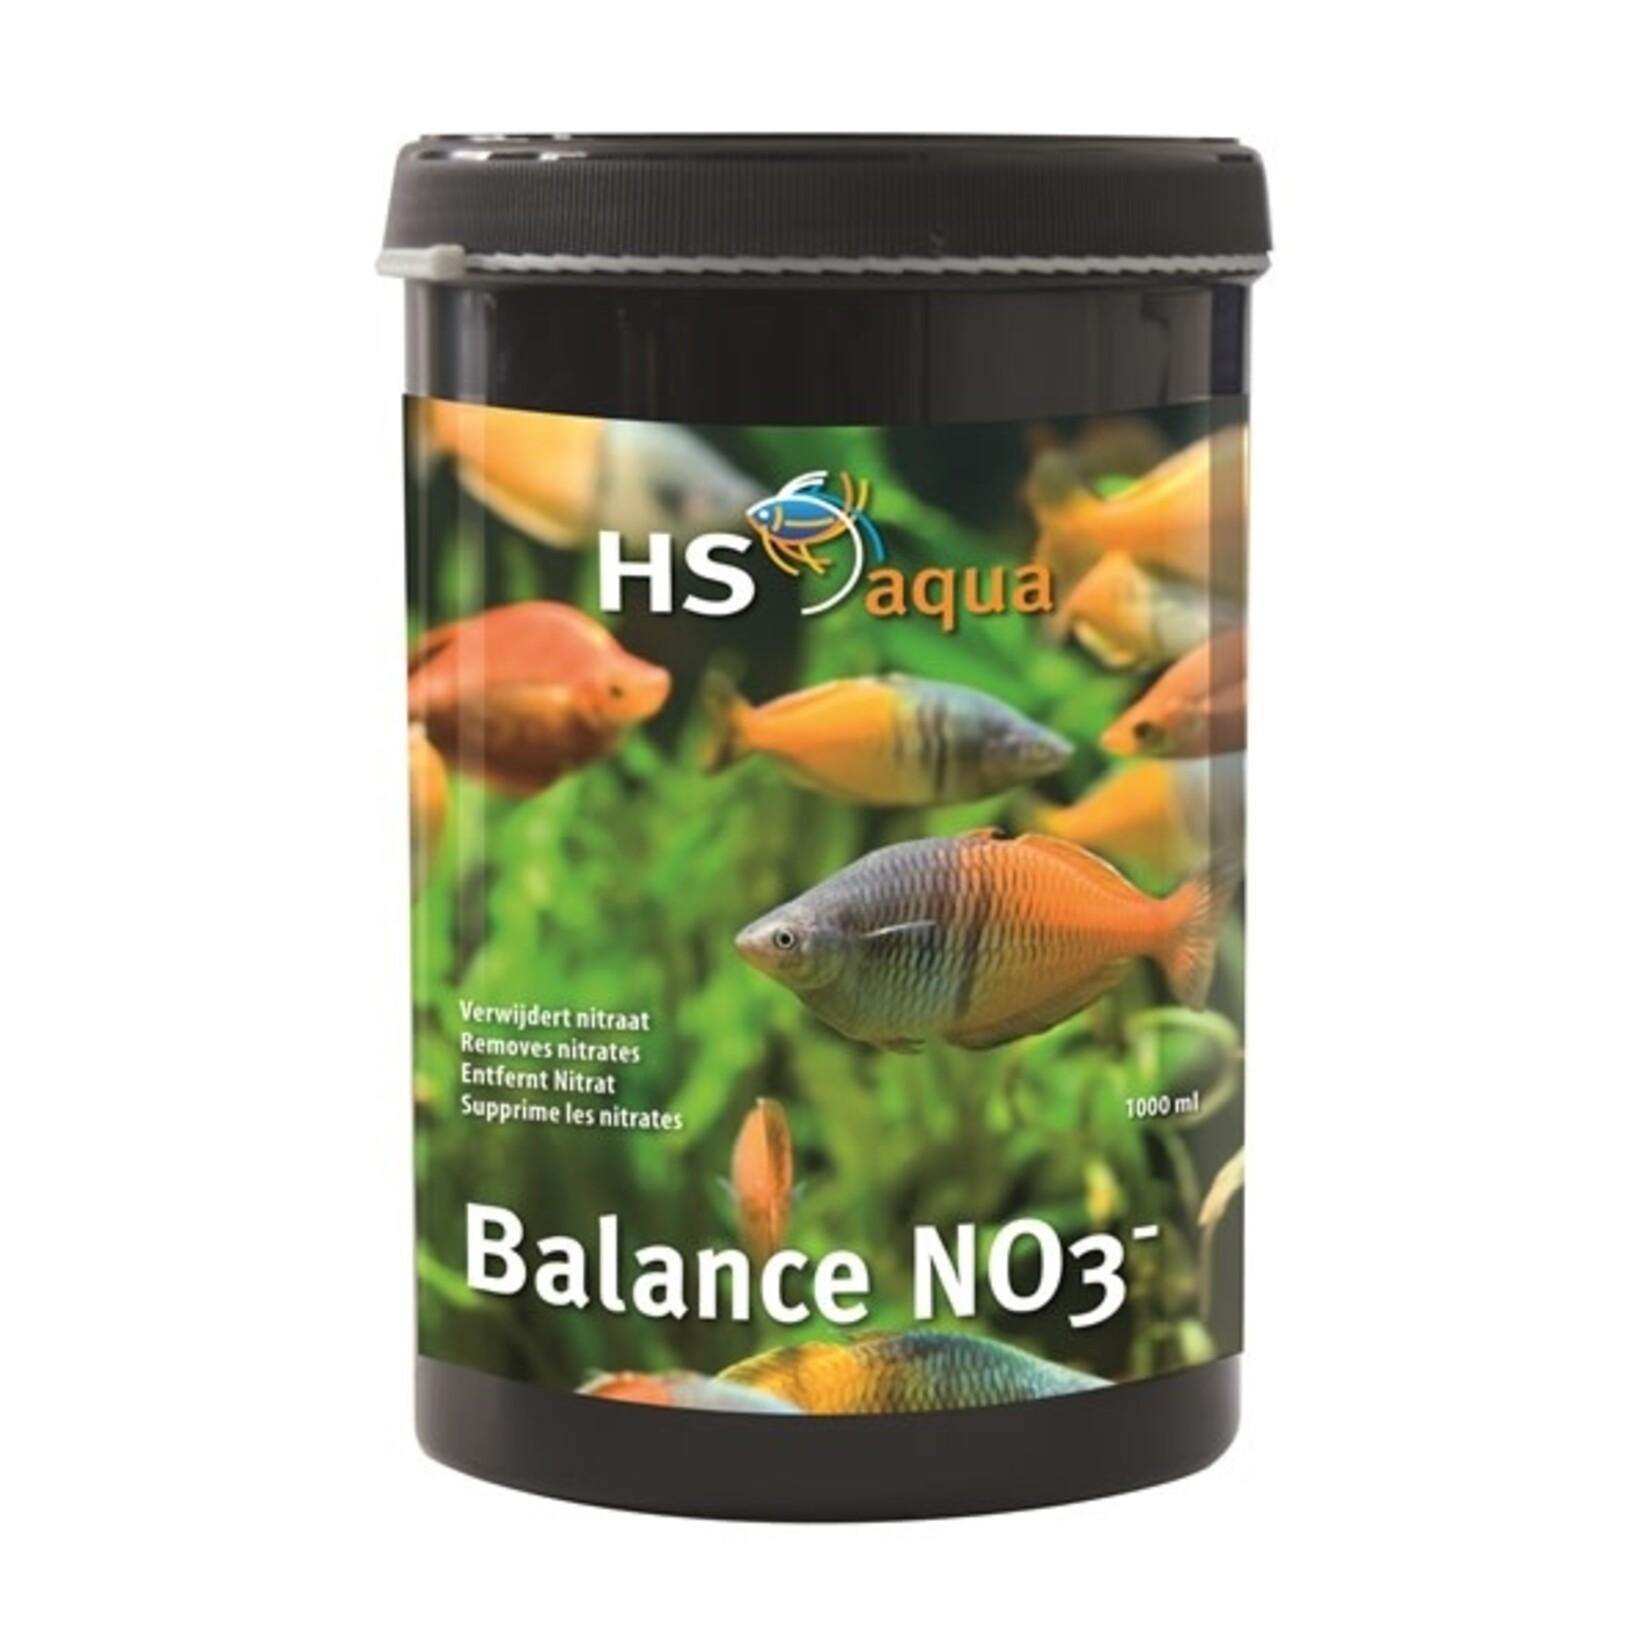 HS Aqua Balance no3 minus 1000 ml